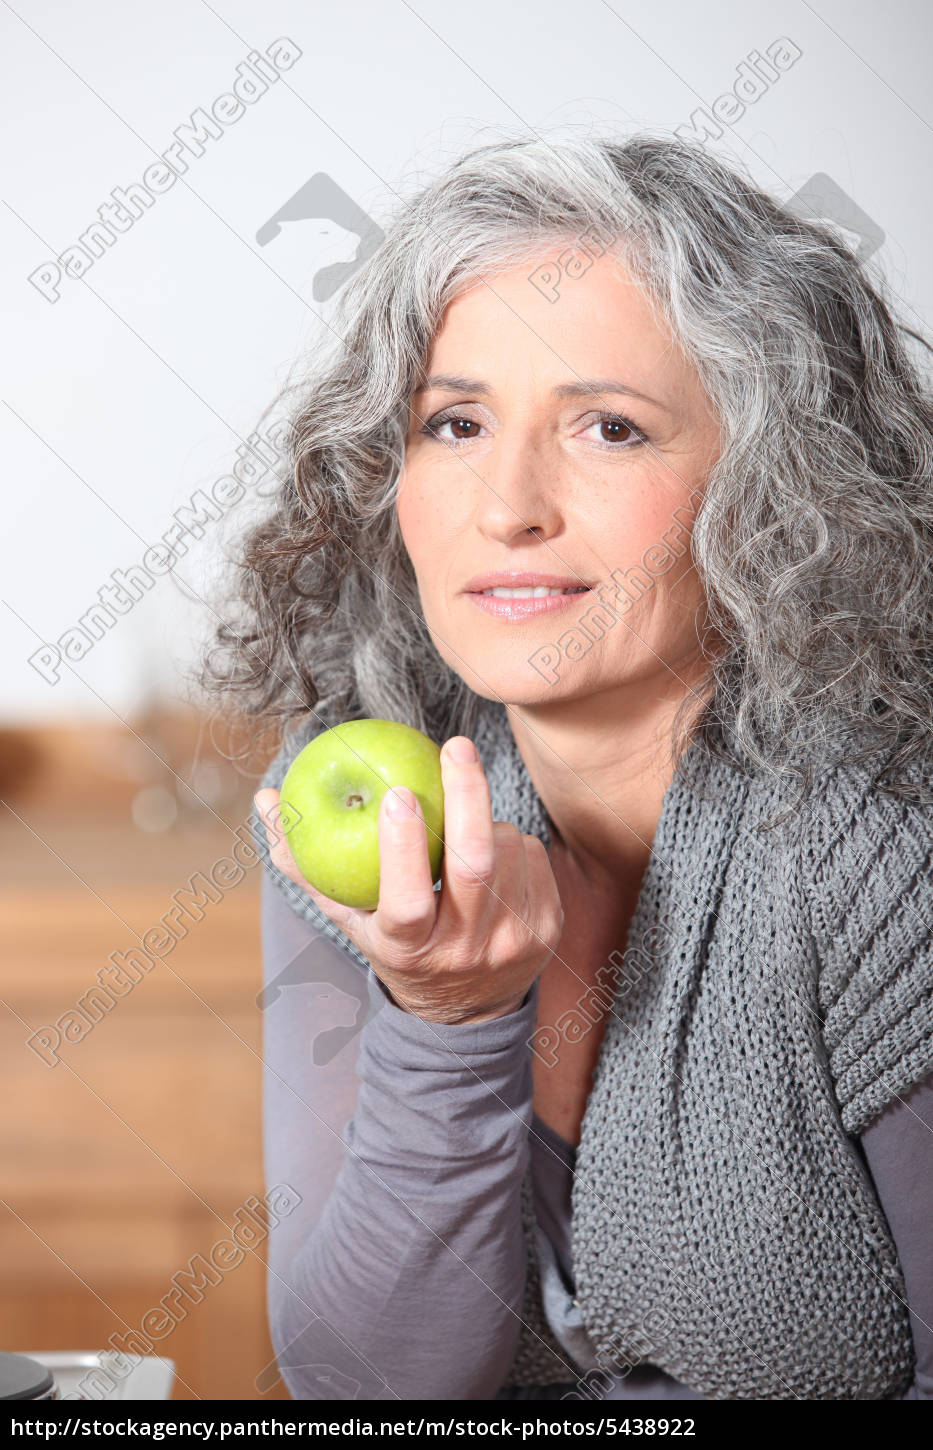 Mature granny pics free Beautiful Mature Woman Eating Green Apple Royalty Free Image 5438922 Panthermedia Stock Agency